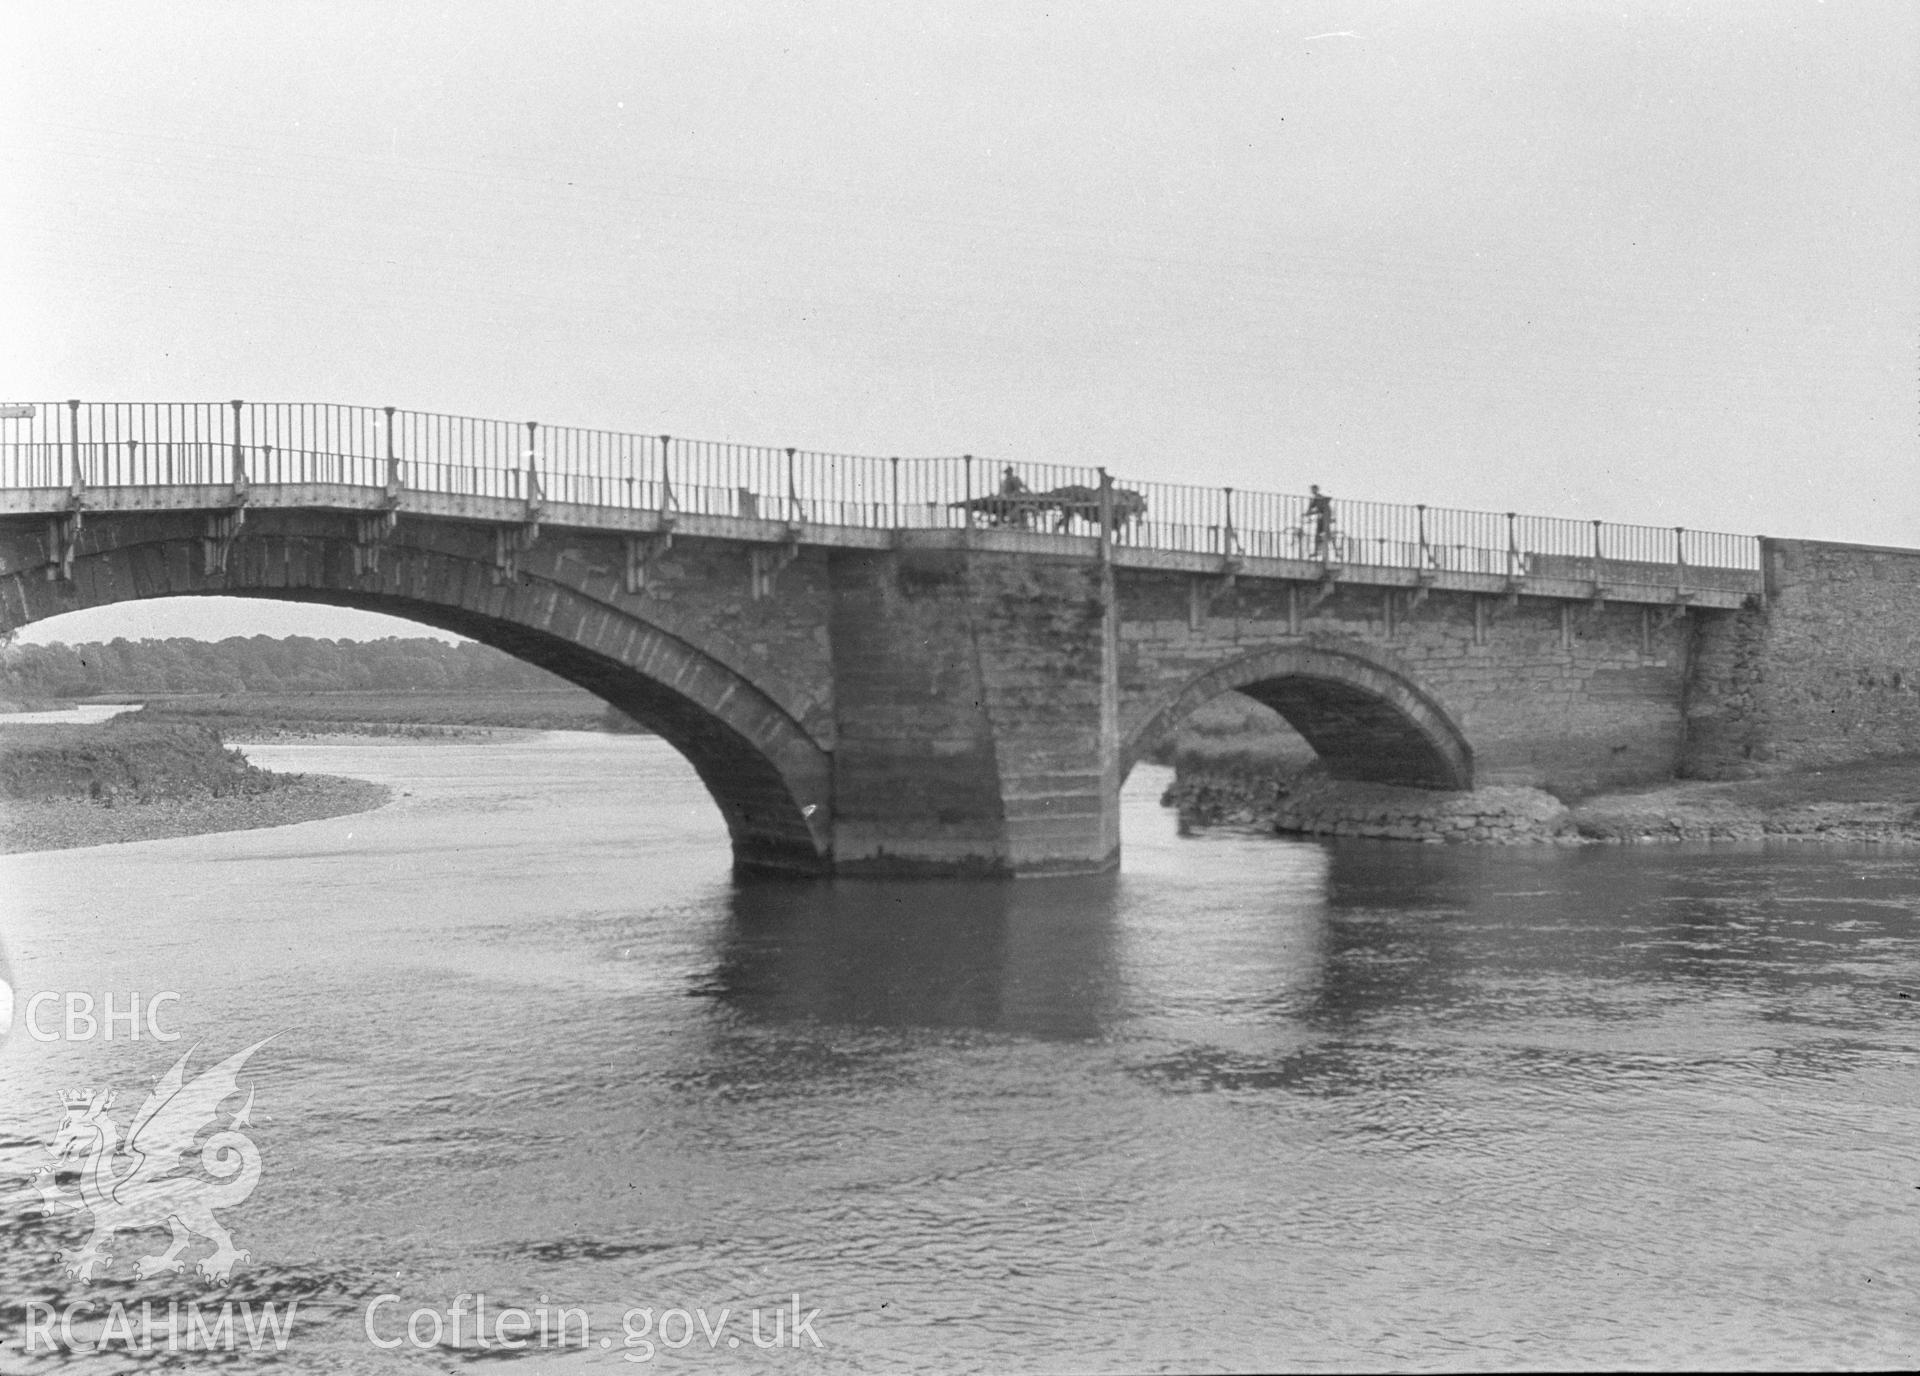 Digital copy of a nitrate negative showing view of Rhuddlan Bridge taken by Leonard Monroe, 1938.